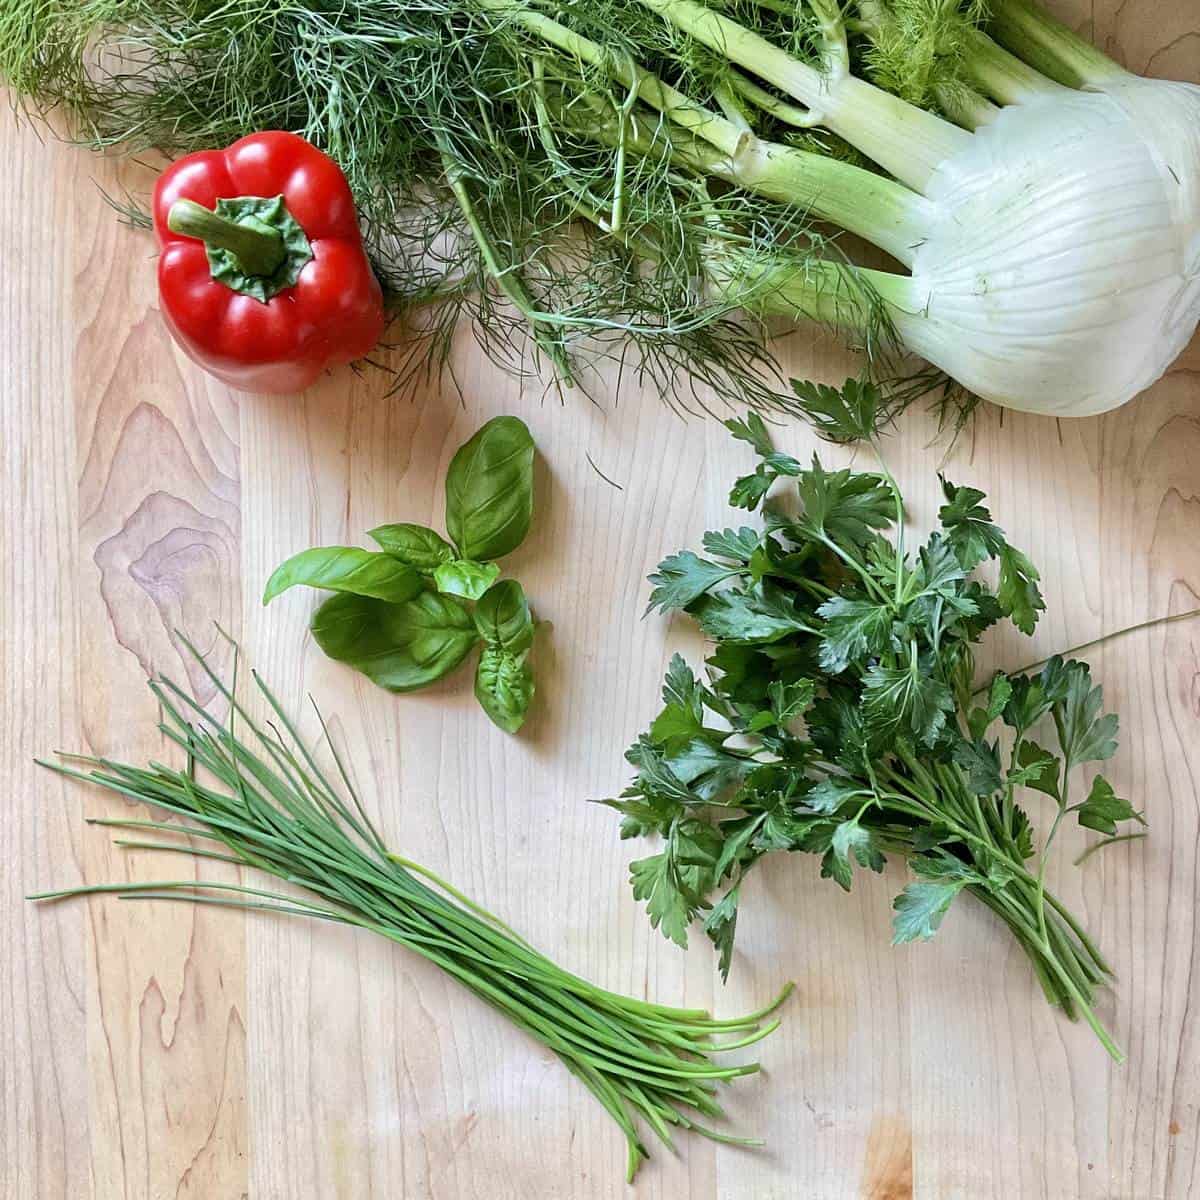 Ingredients to make fregola salad on a wooden board.